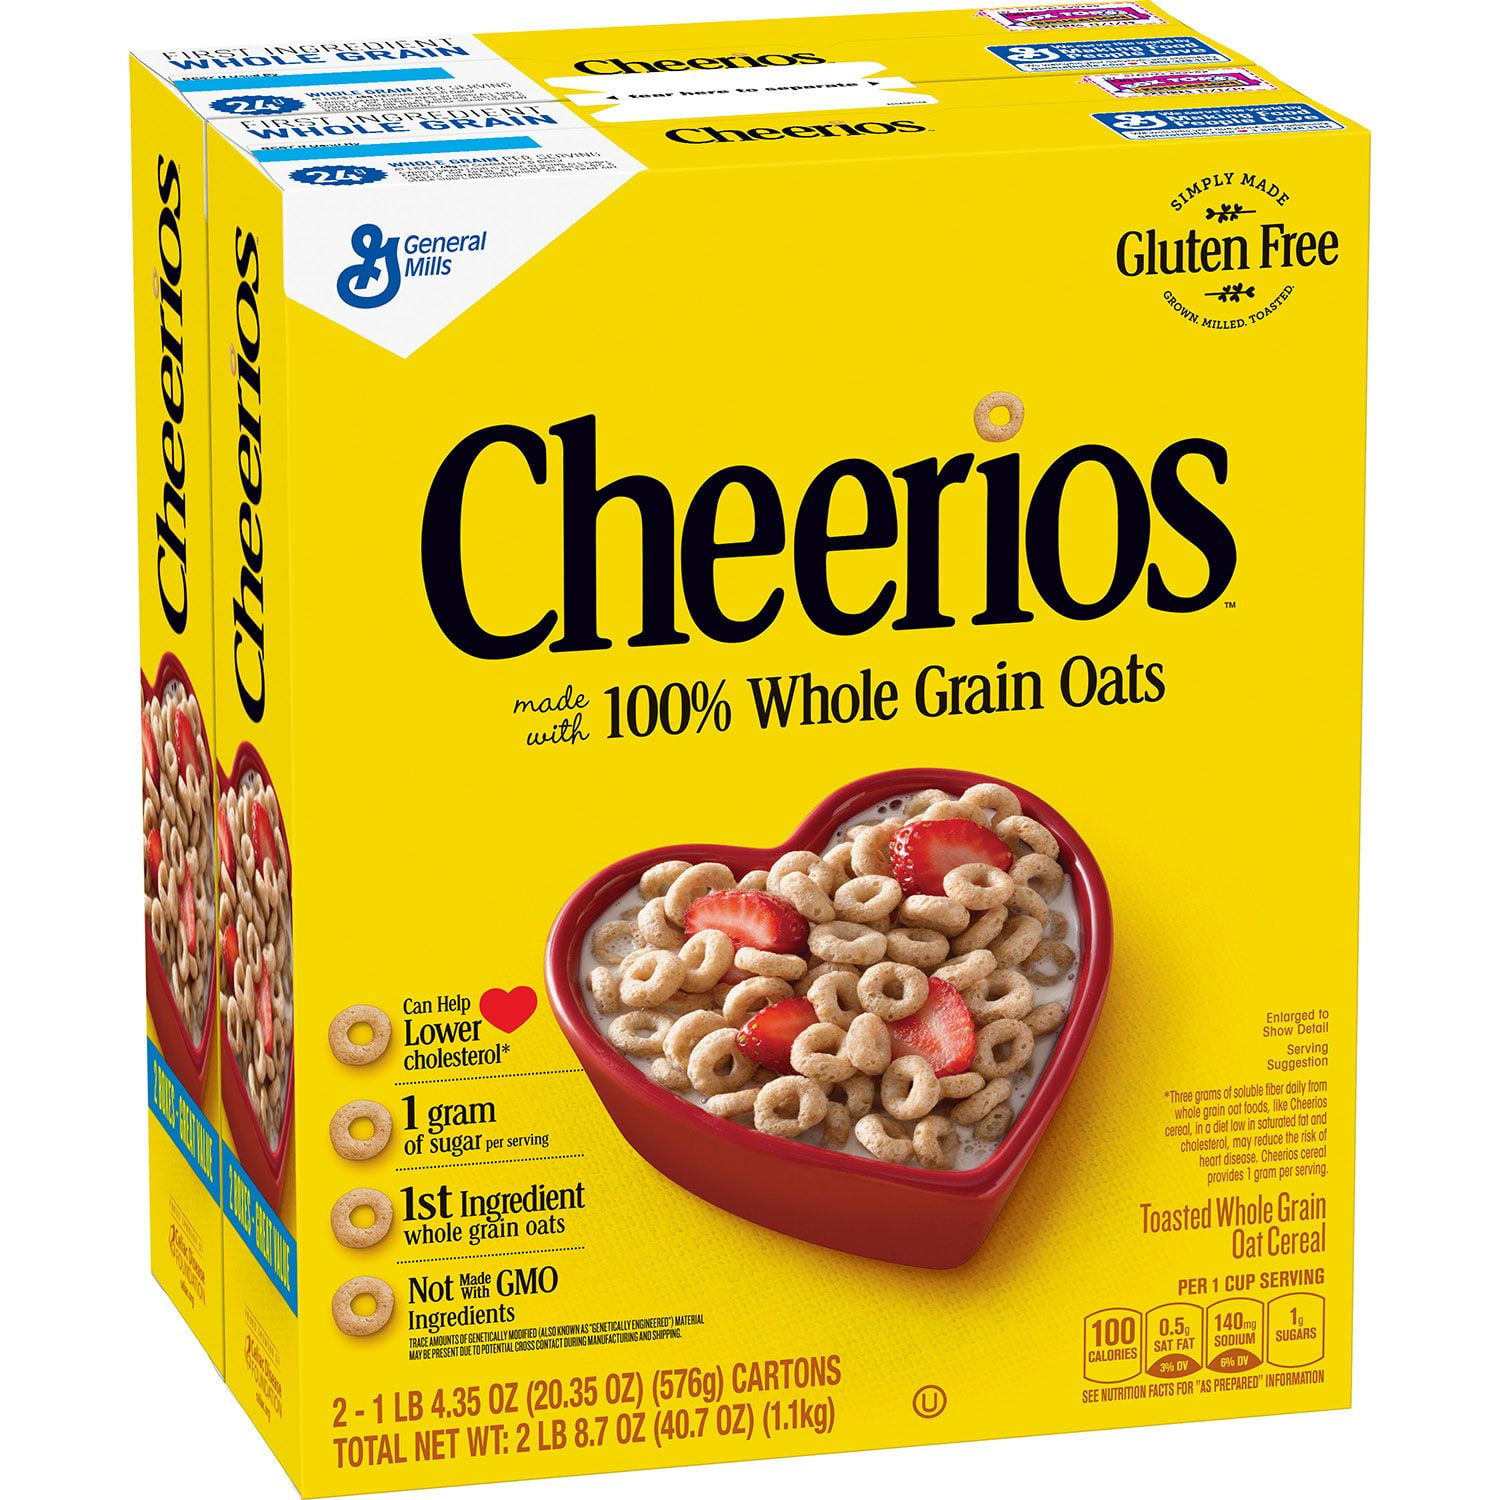 General Mills Cheerios Gluten-Free Cereal 20.35 oz, 2-count